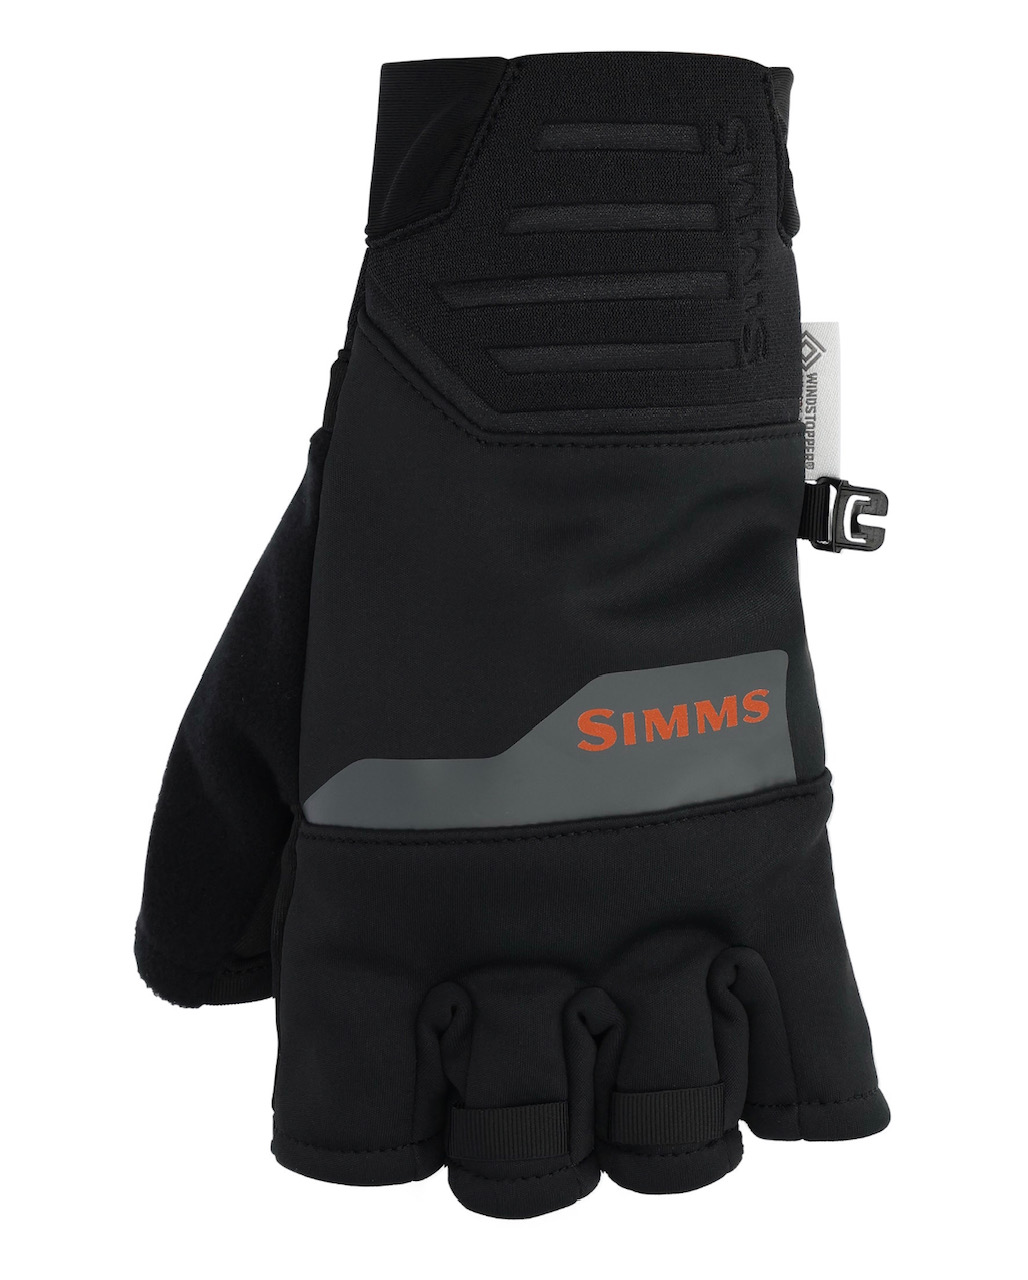 Simms WINDSTOPPER Half-Finger Glove - Black - Small